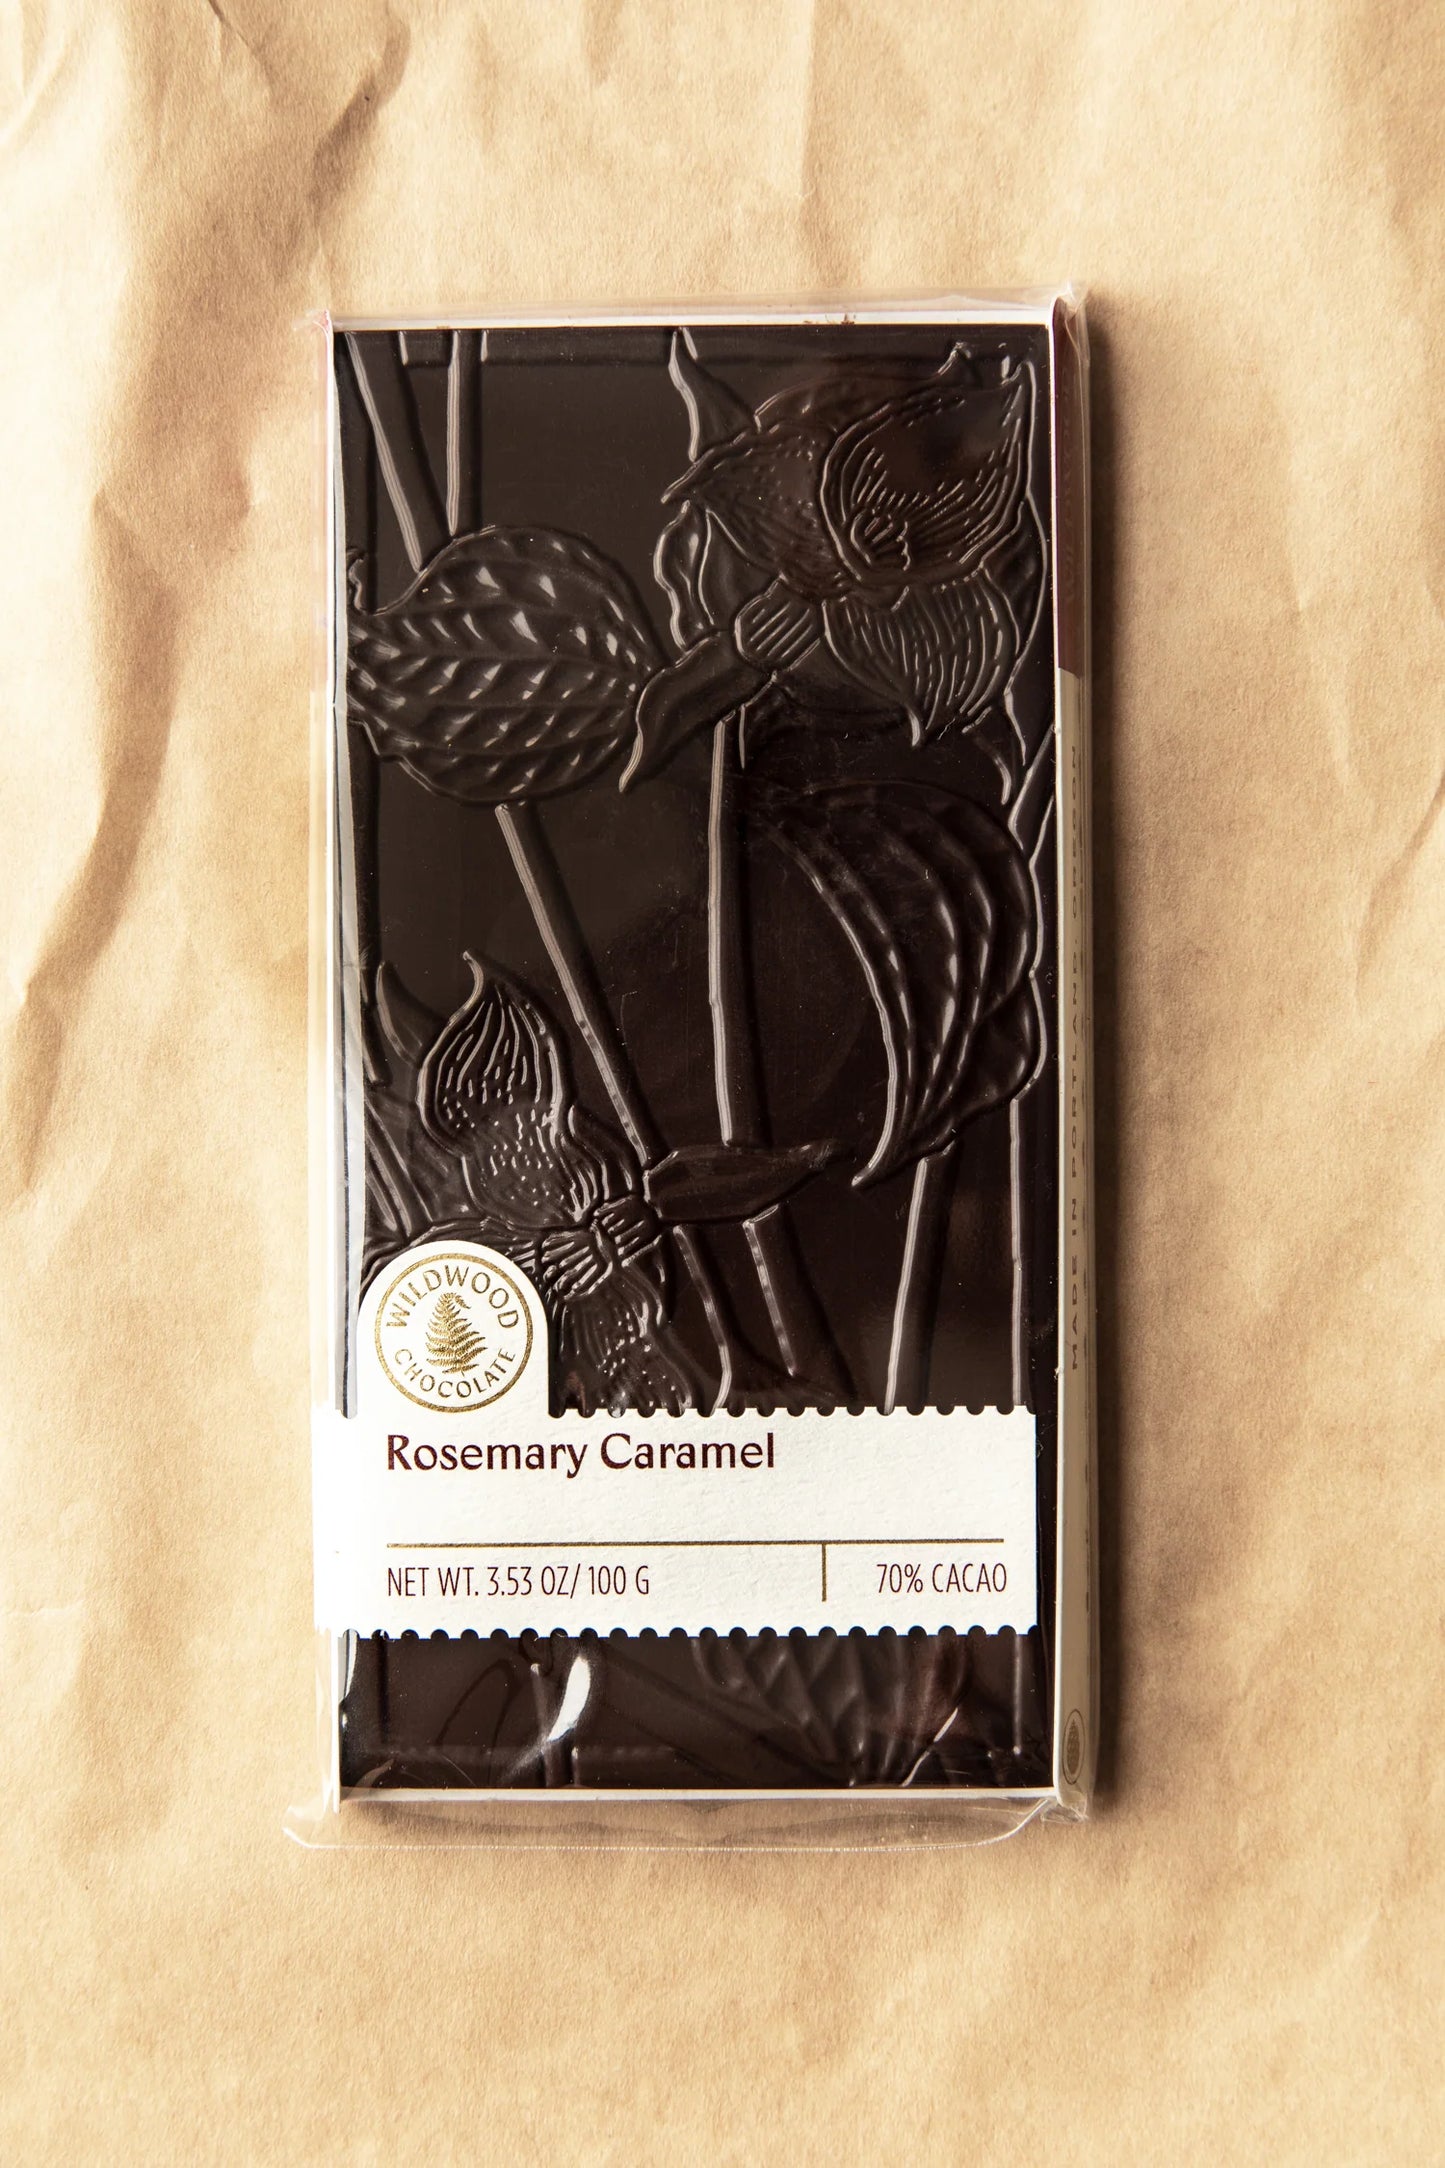 Rosemary Caramel Chocolate Bar